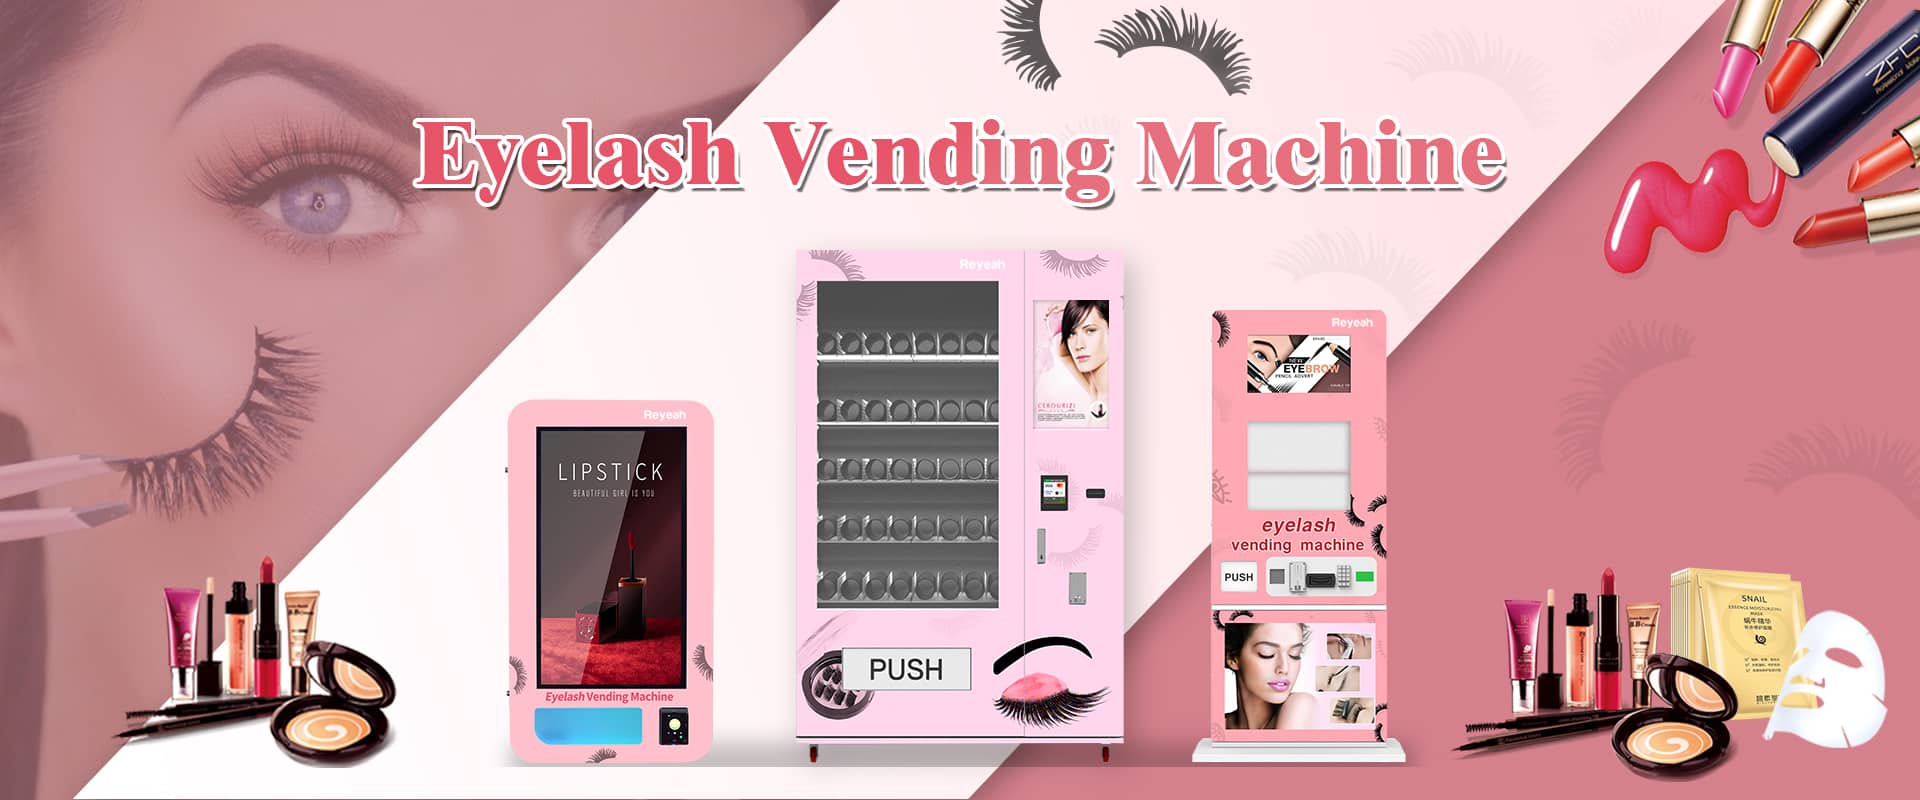 Eyelash Vending Machines